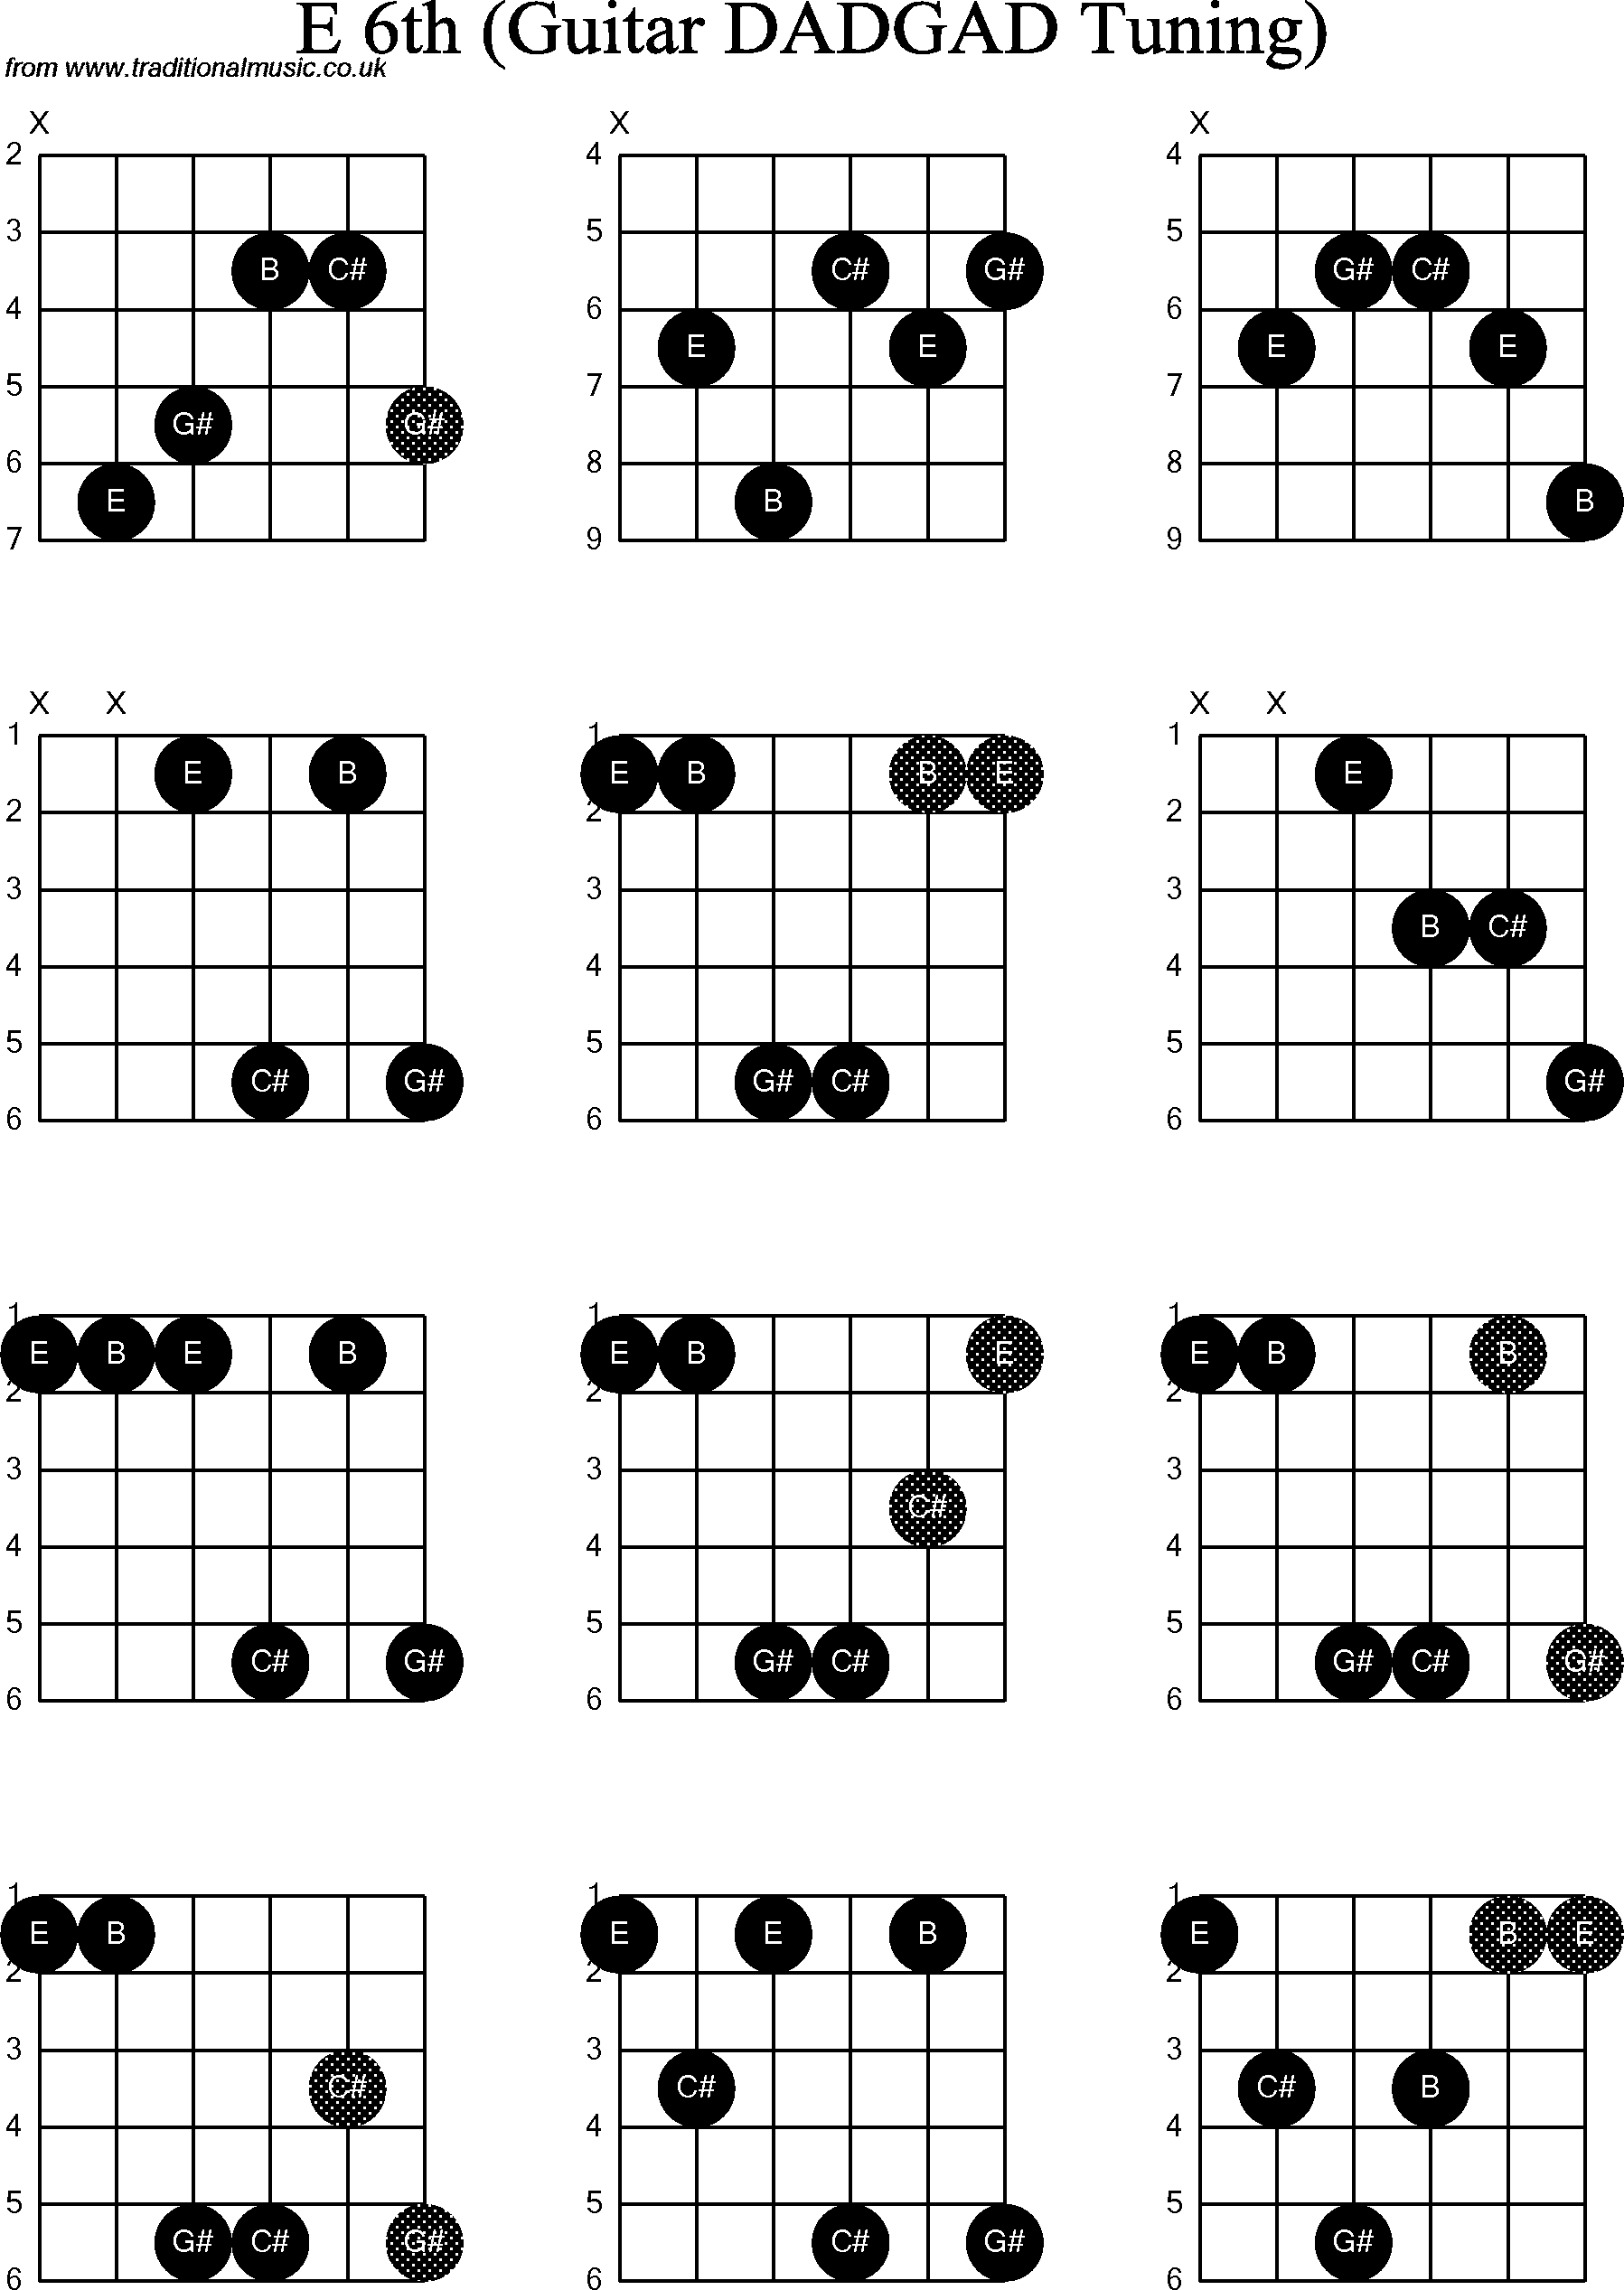 Chord Diagrams for D Modal Guitar(DADGAD), E6th